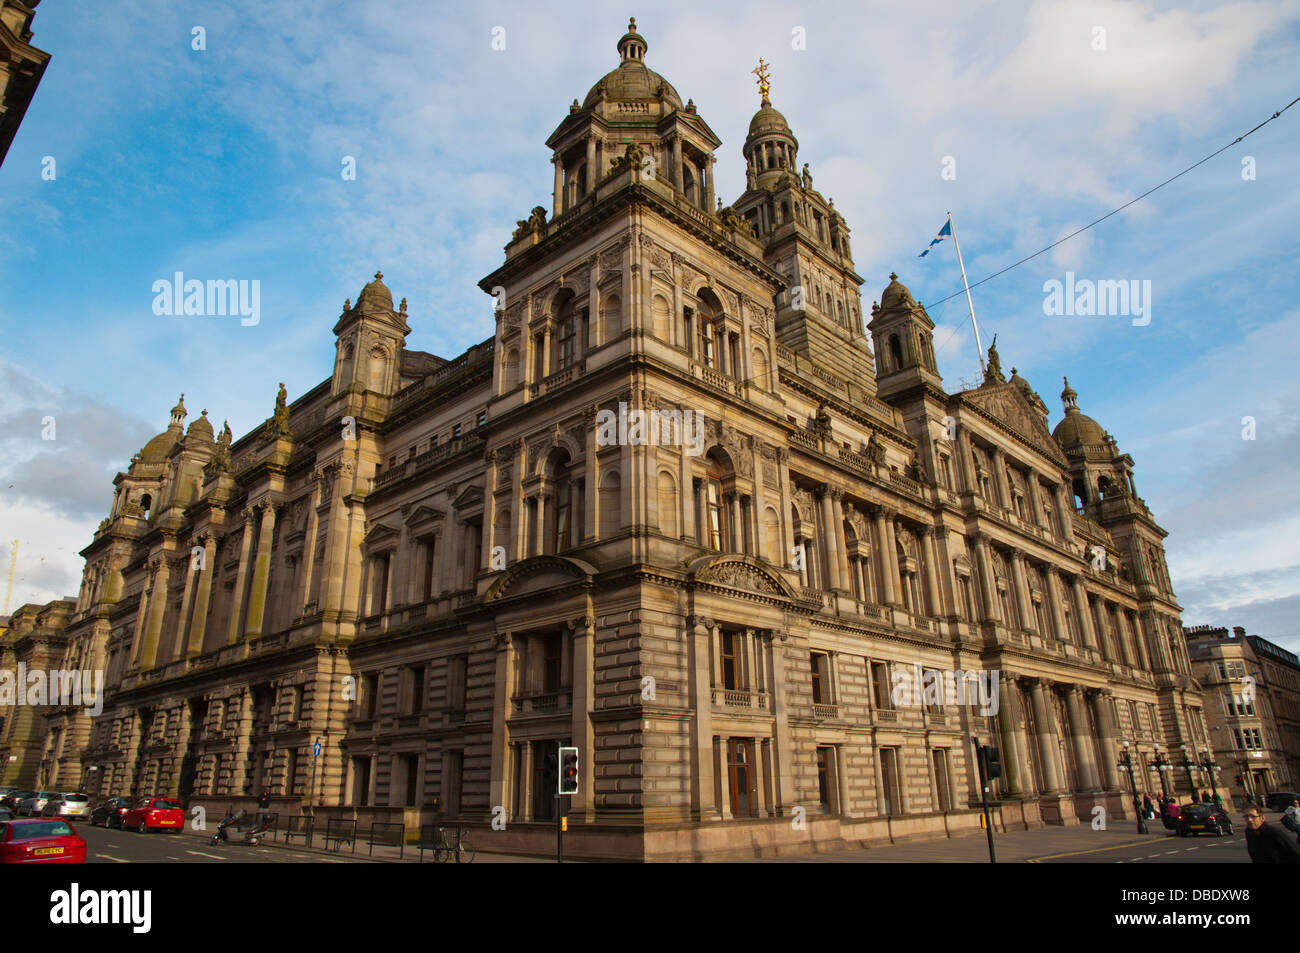 Época victoriana Glasgow City Chambers ayuntamiento (1888) George Square central Glasgow Scotland Reino Unido Reino Unido Europa Foto de stock